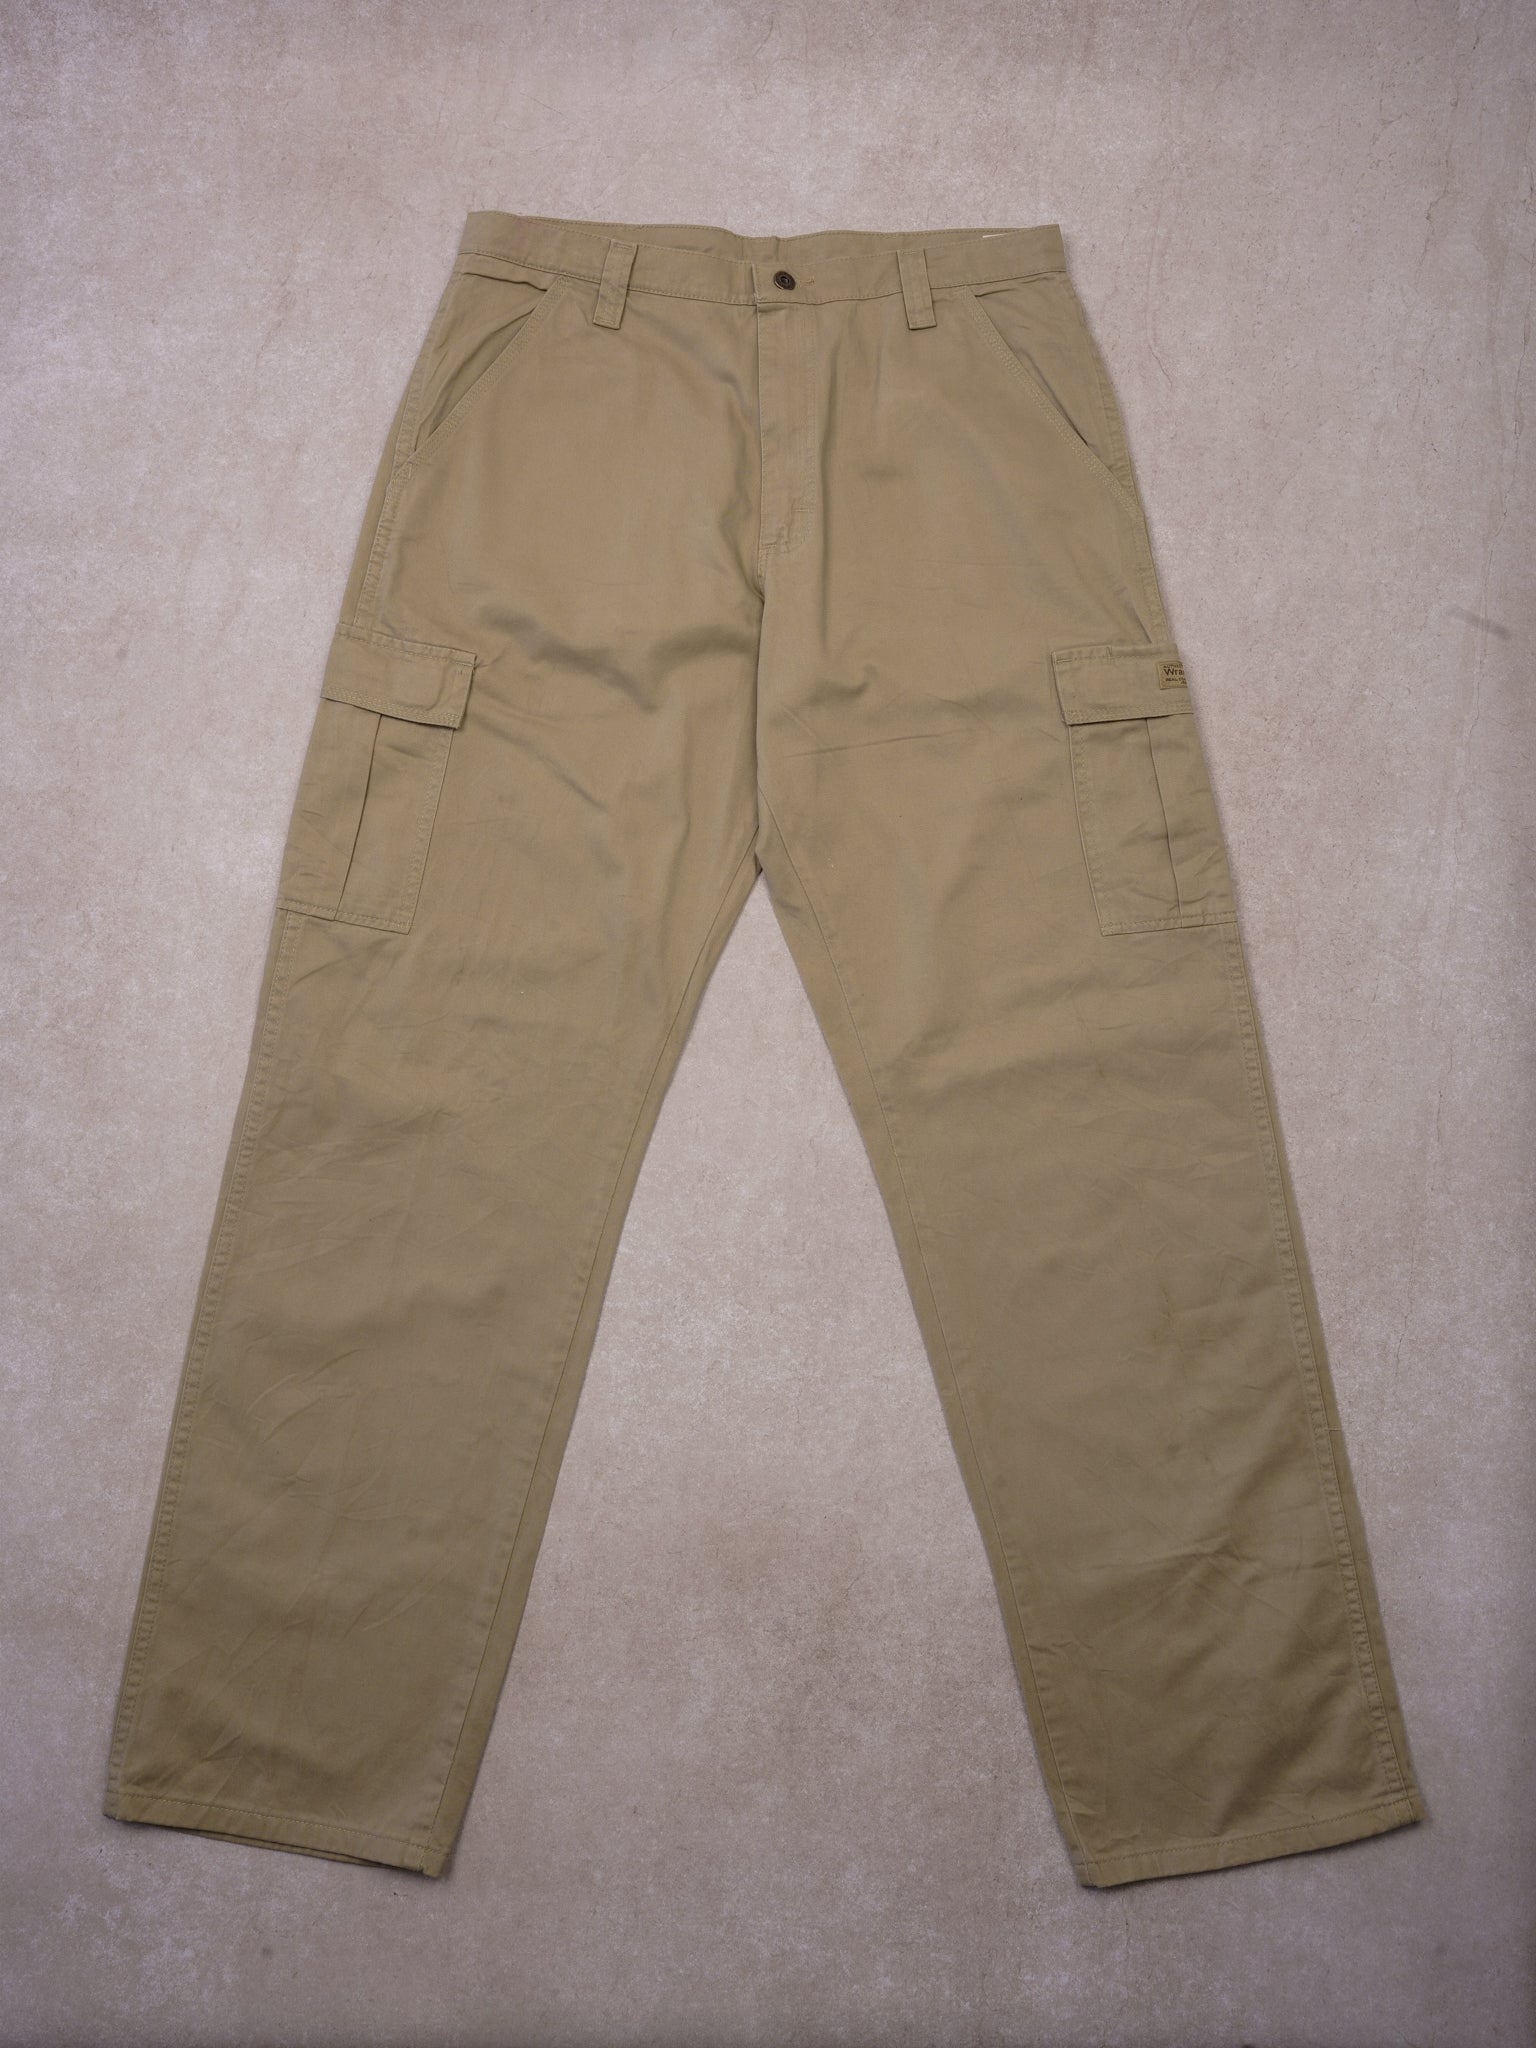 Vintage 90s Beige Wranglers Cargo Workwear Pants (36x35)